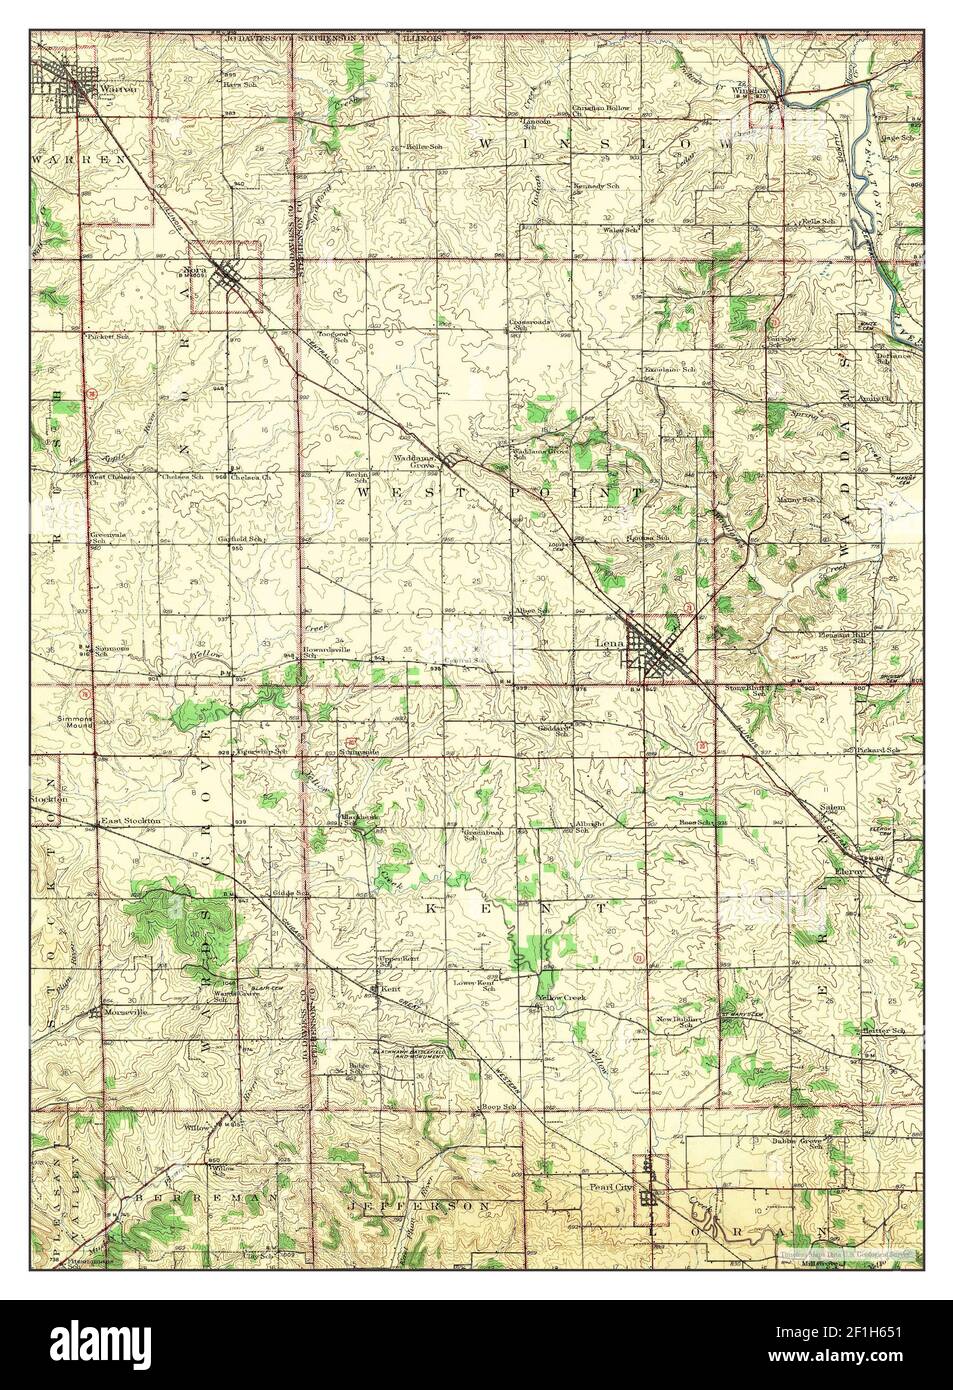 Lena, Illinois, map 1943, 1:62500, United States of America by Timeless  Maps, data U.S. Geological Survey Stock Photo - Alamy